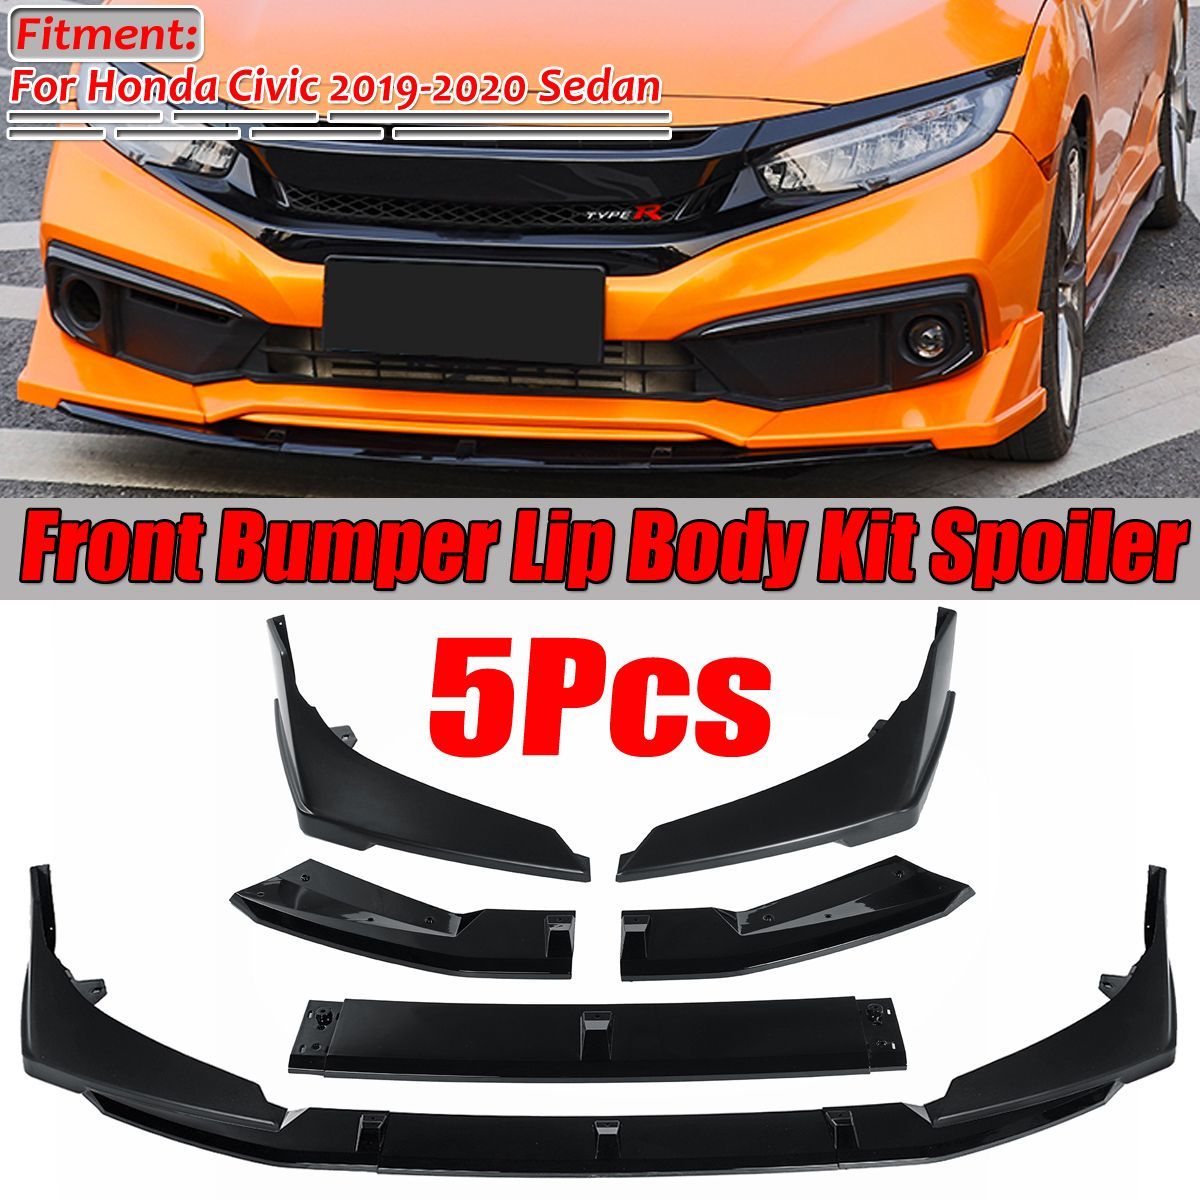 5PCS-Front-Bumper-Protector-Lip-Body-Kit-Spoiler-Splitter-For-Honda-Civic-2019-2020-Sedan-1621483